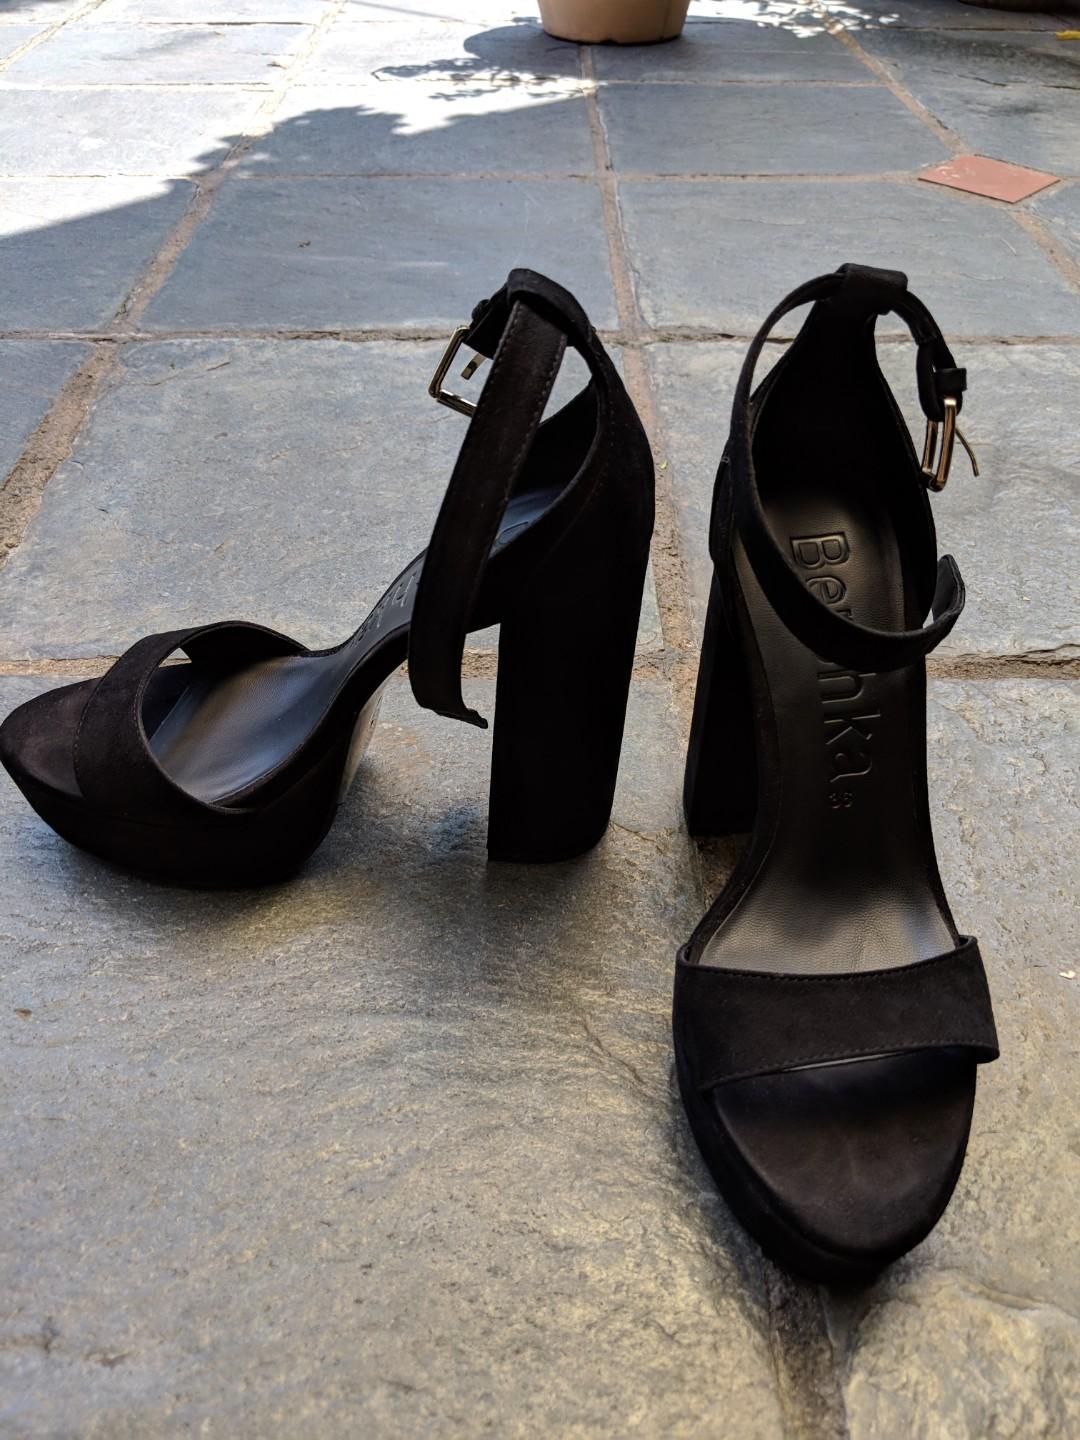 bershka high heels